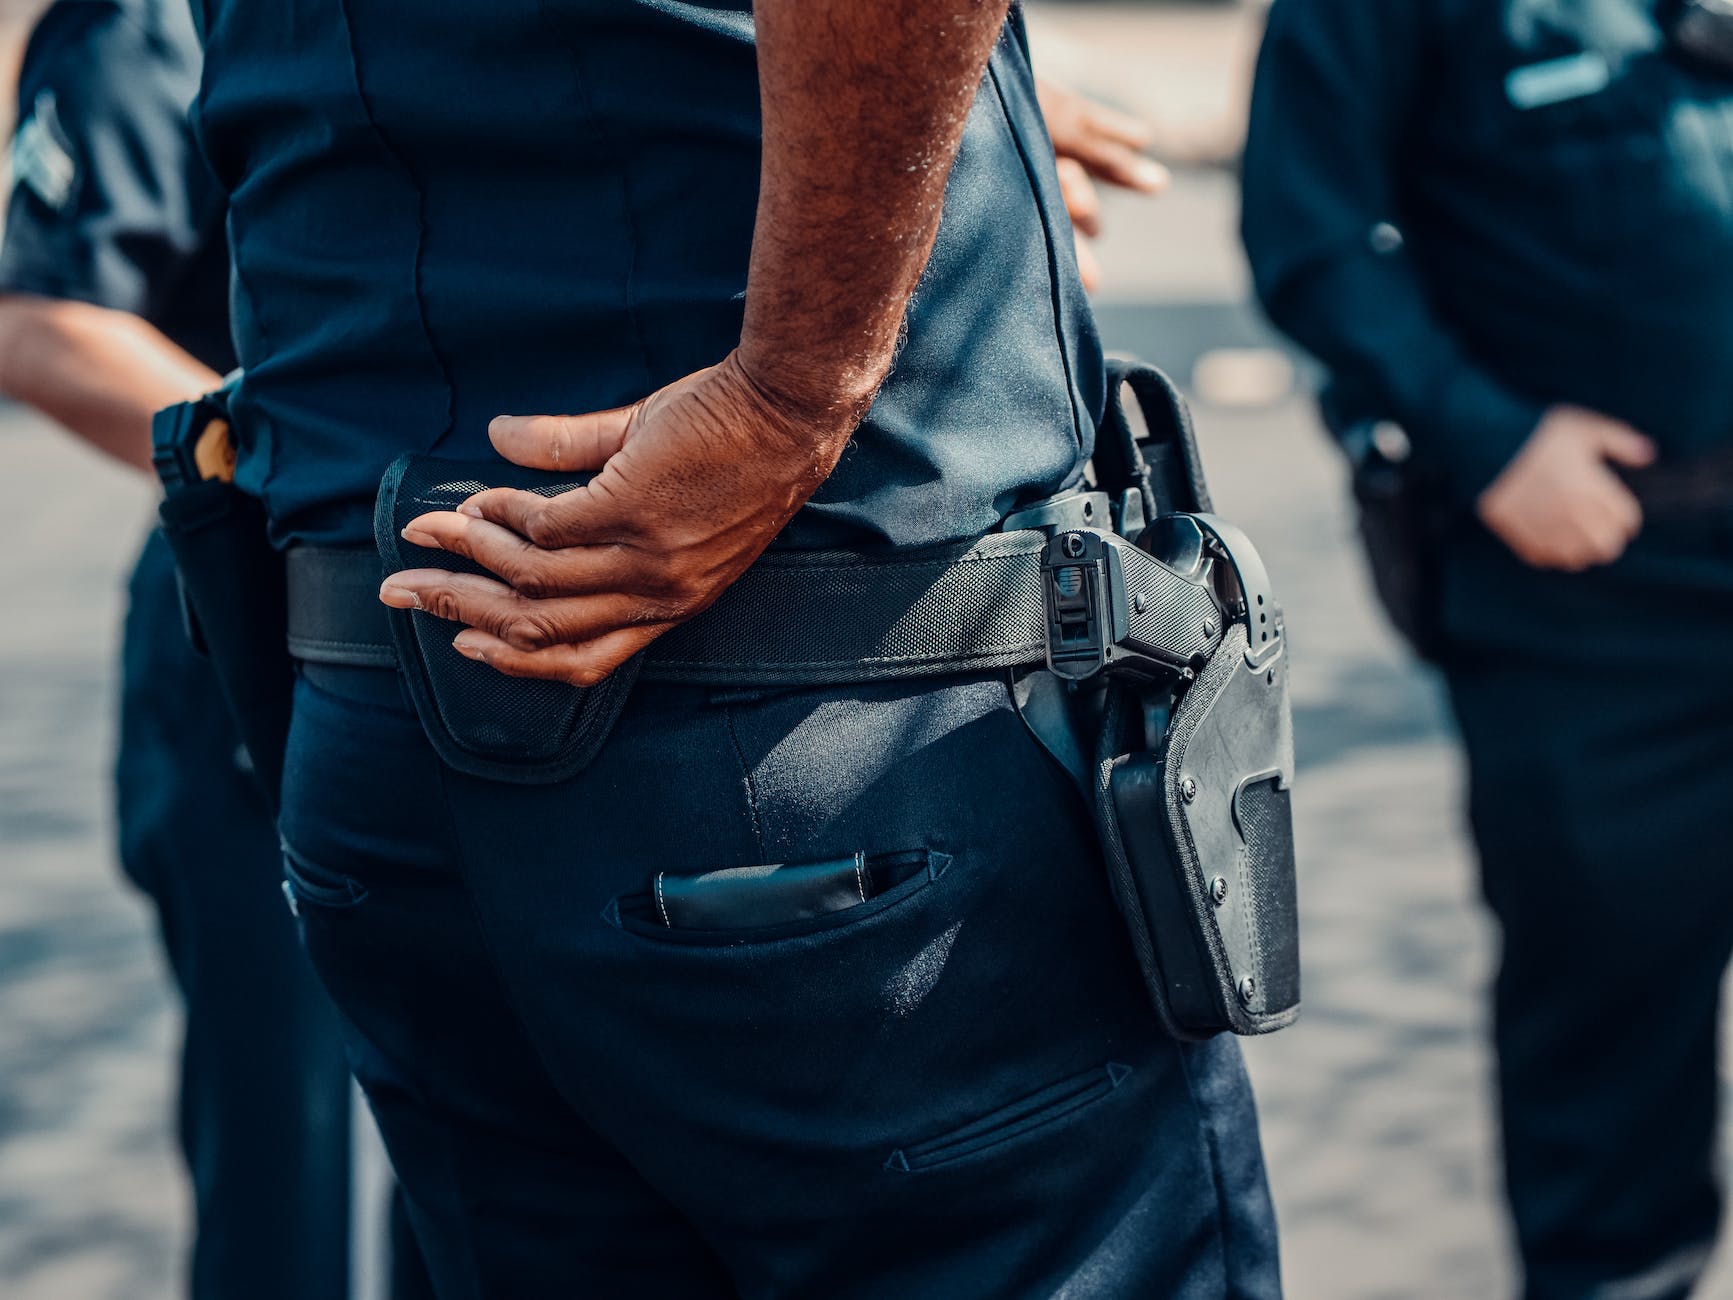 person in blue uniform with a handgun